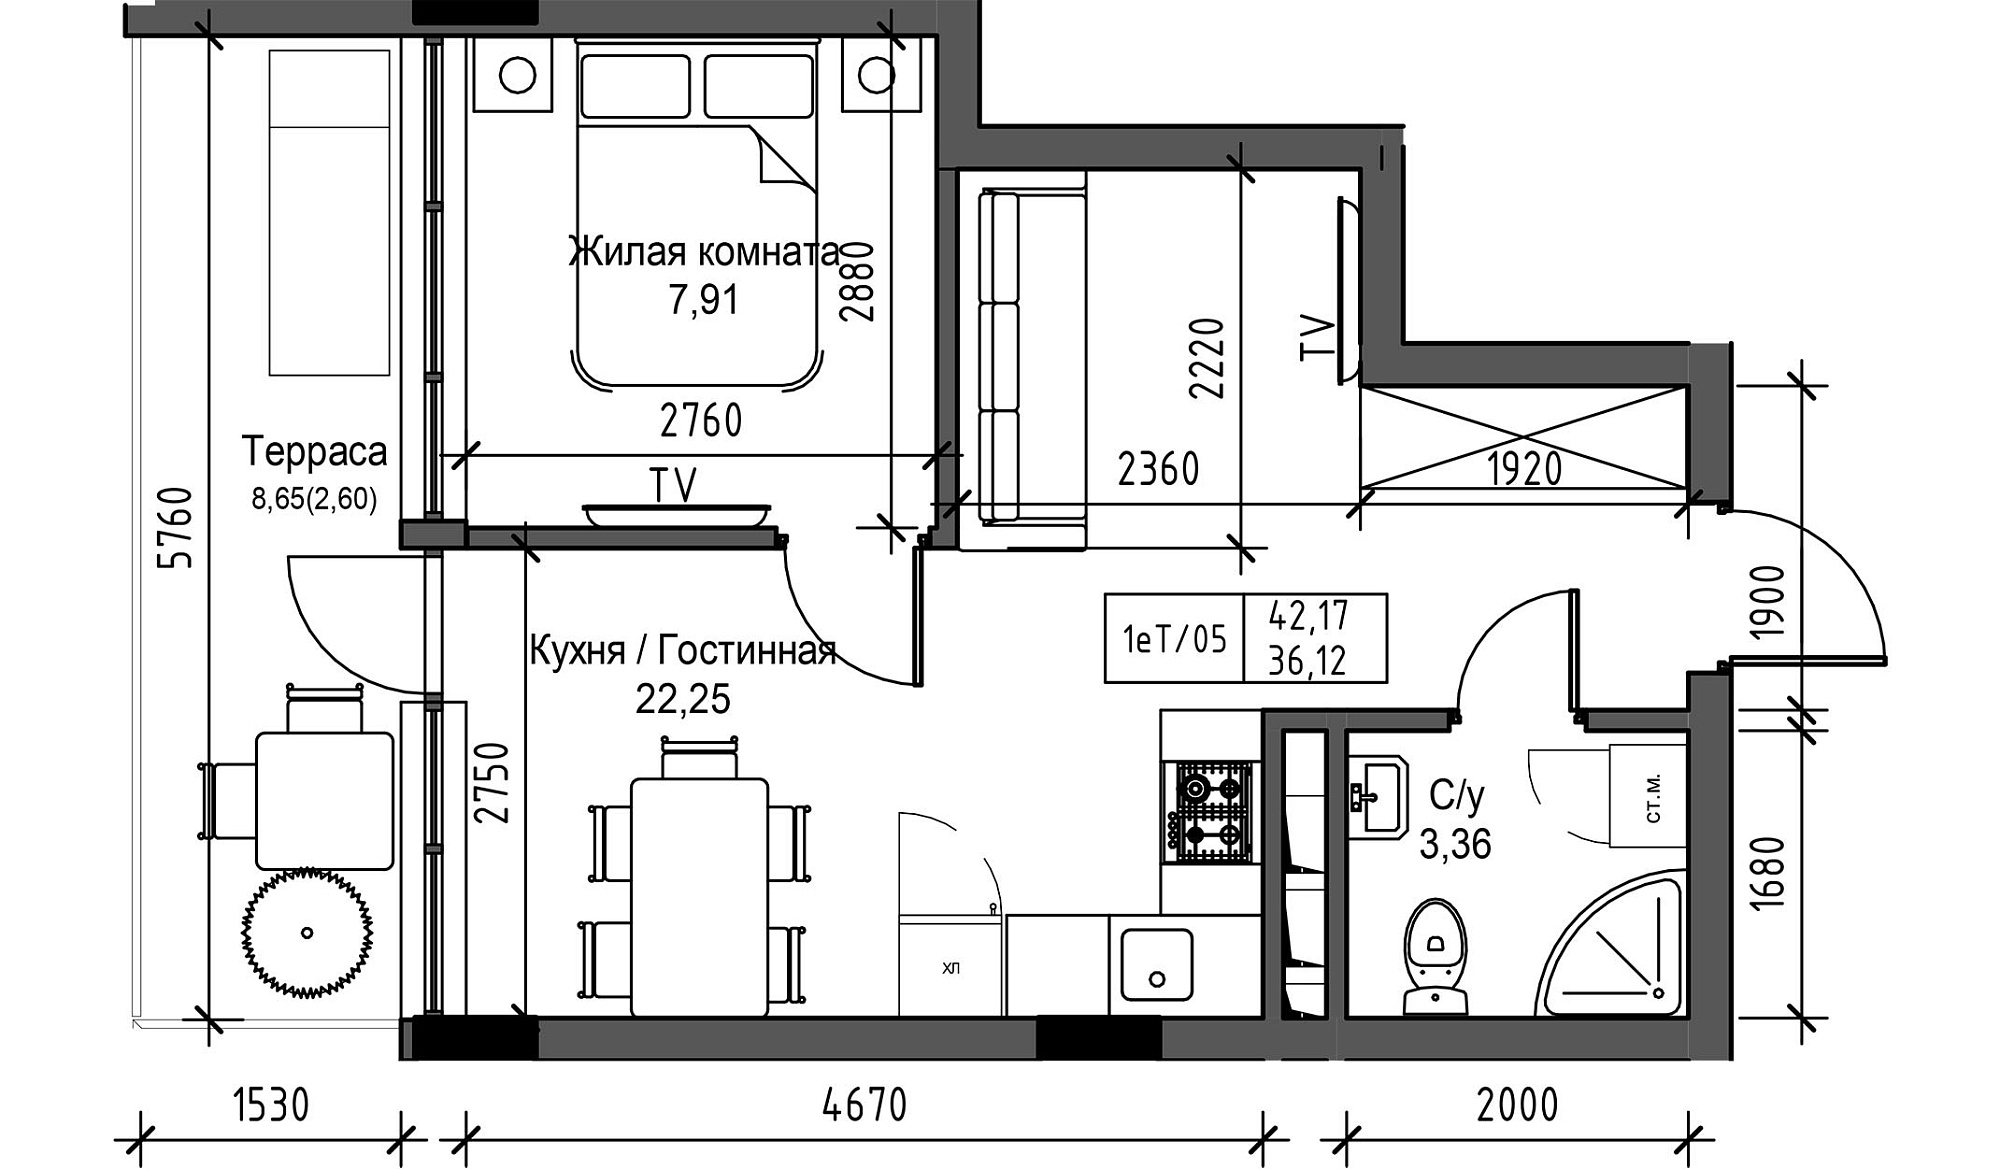 Planning 1-rm flats area 36.12m2, UM-003-03/0011.